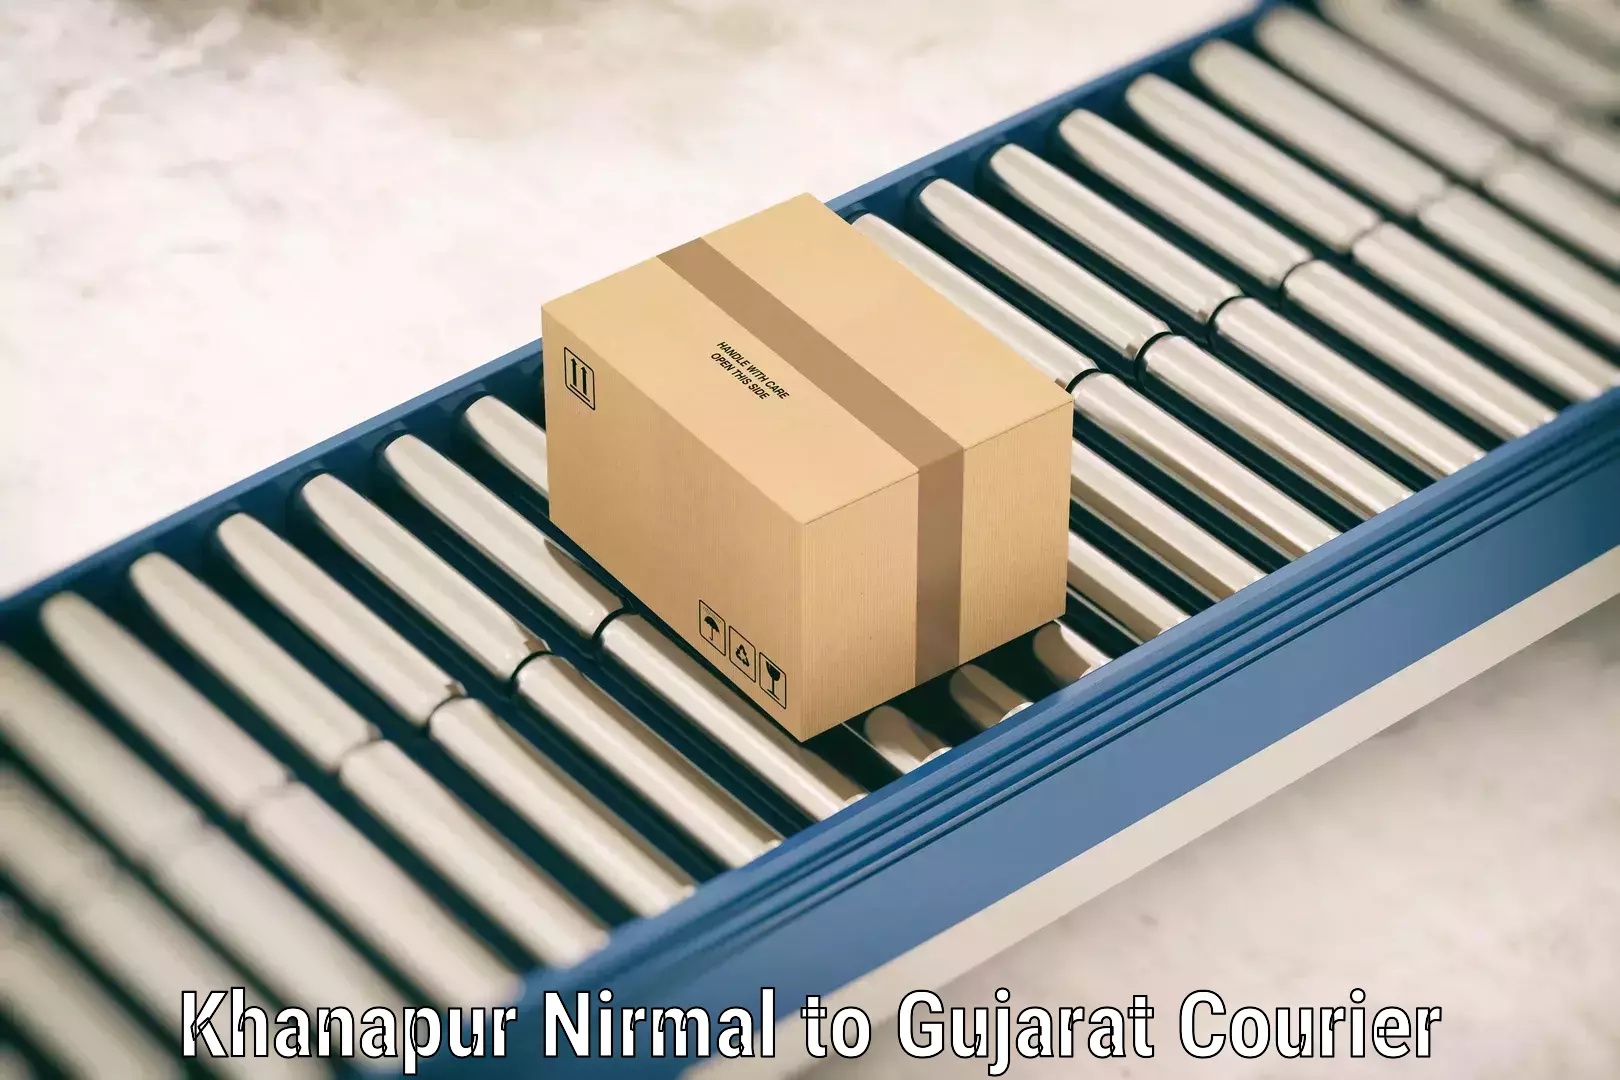 Baggage courier operations Khanapur Nirmal to Ahmedabad